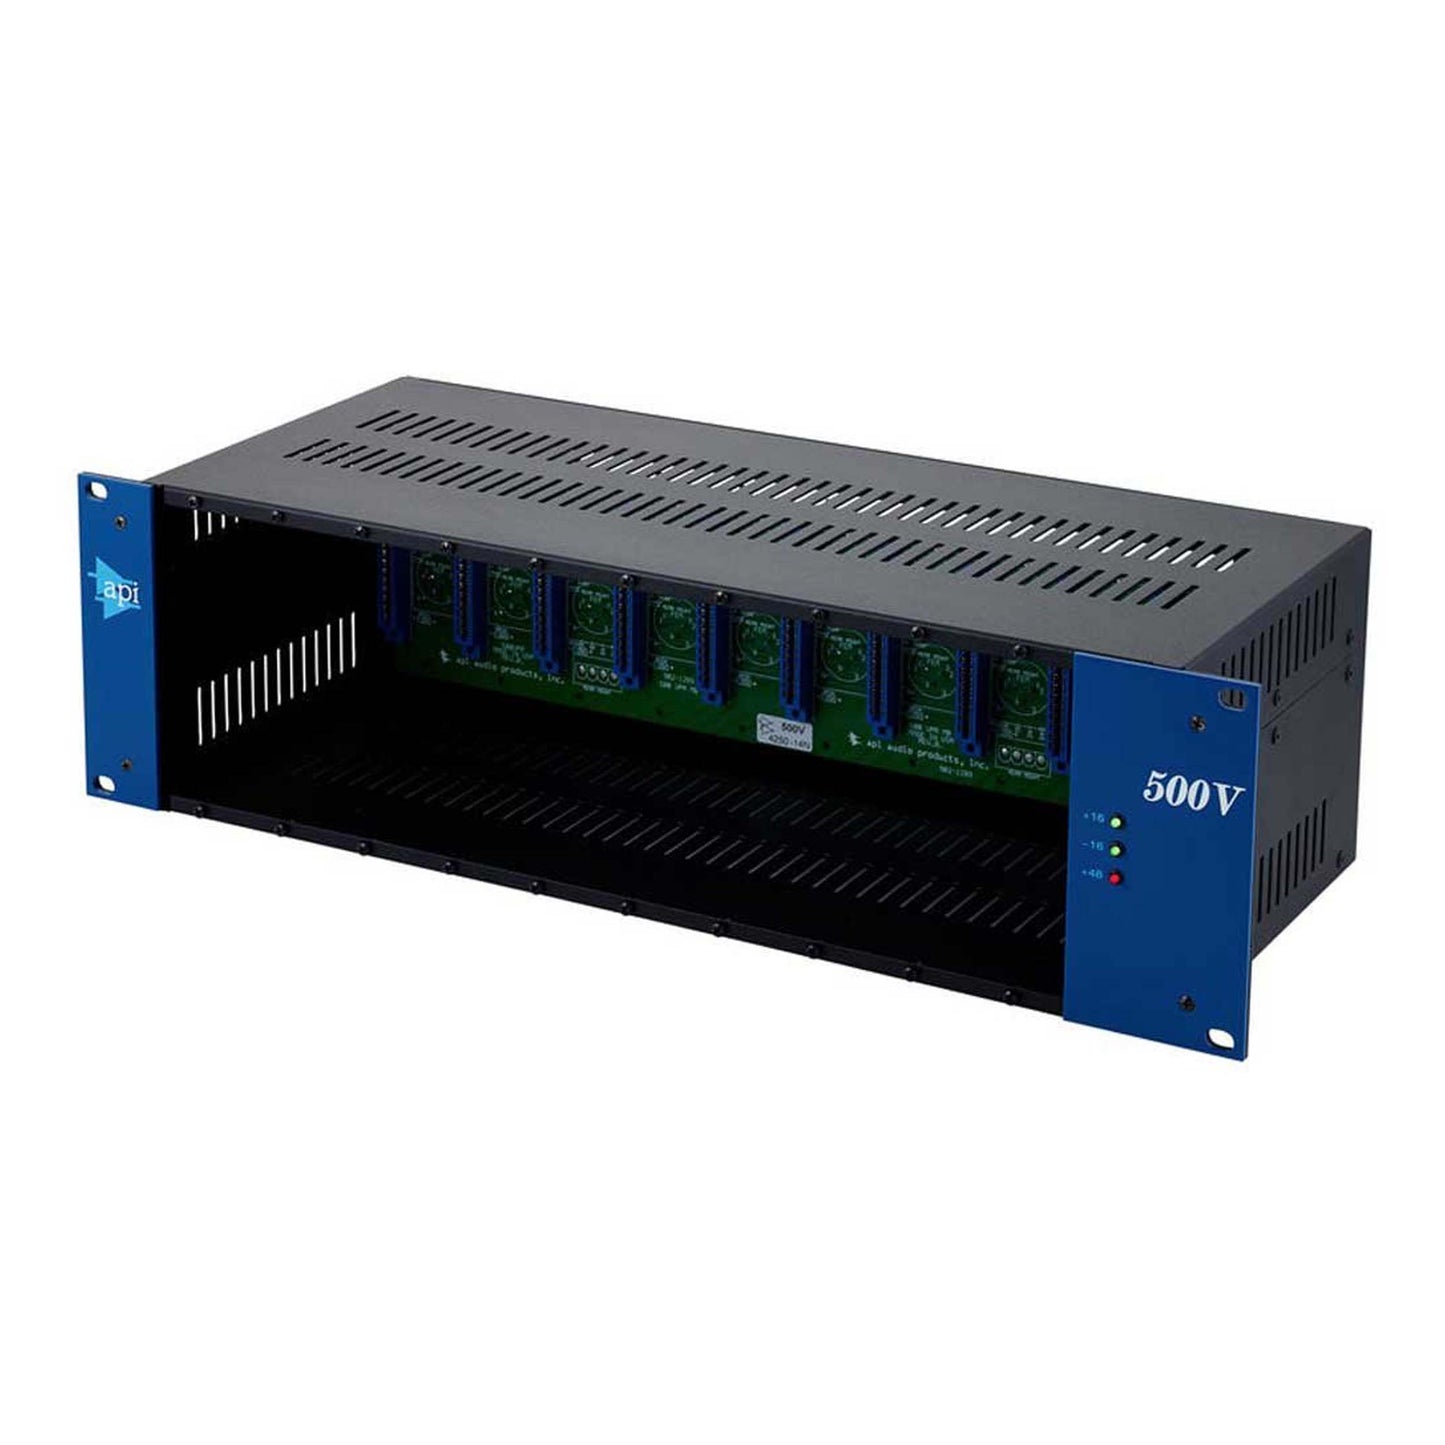 API 500VPR 10 Slot Rack with Power Supply